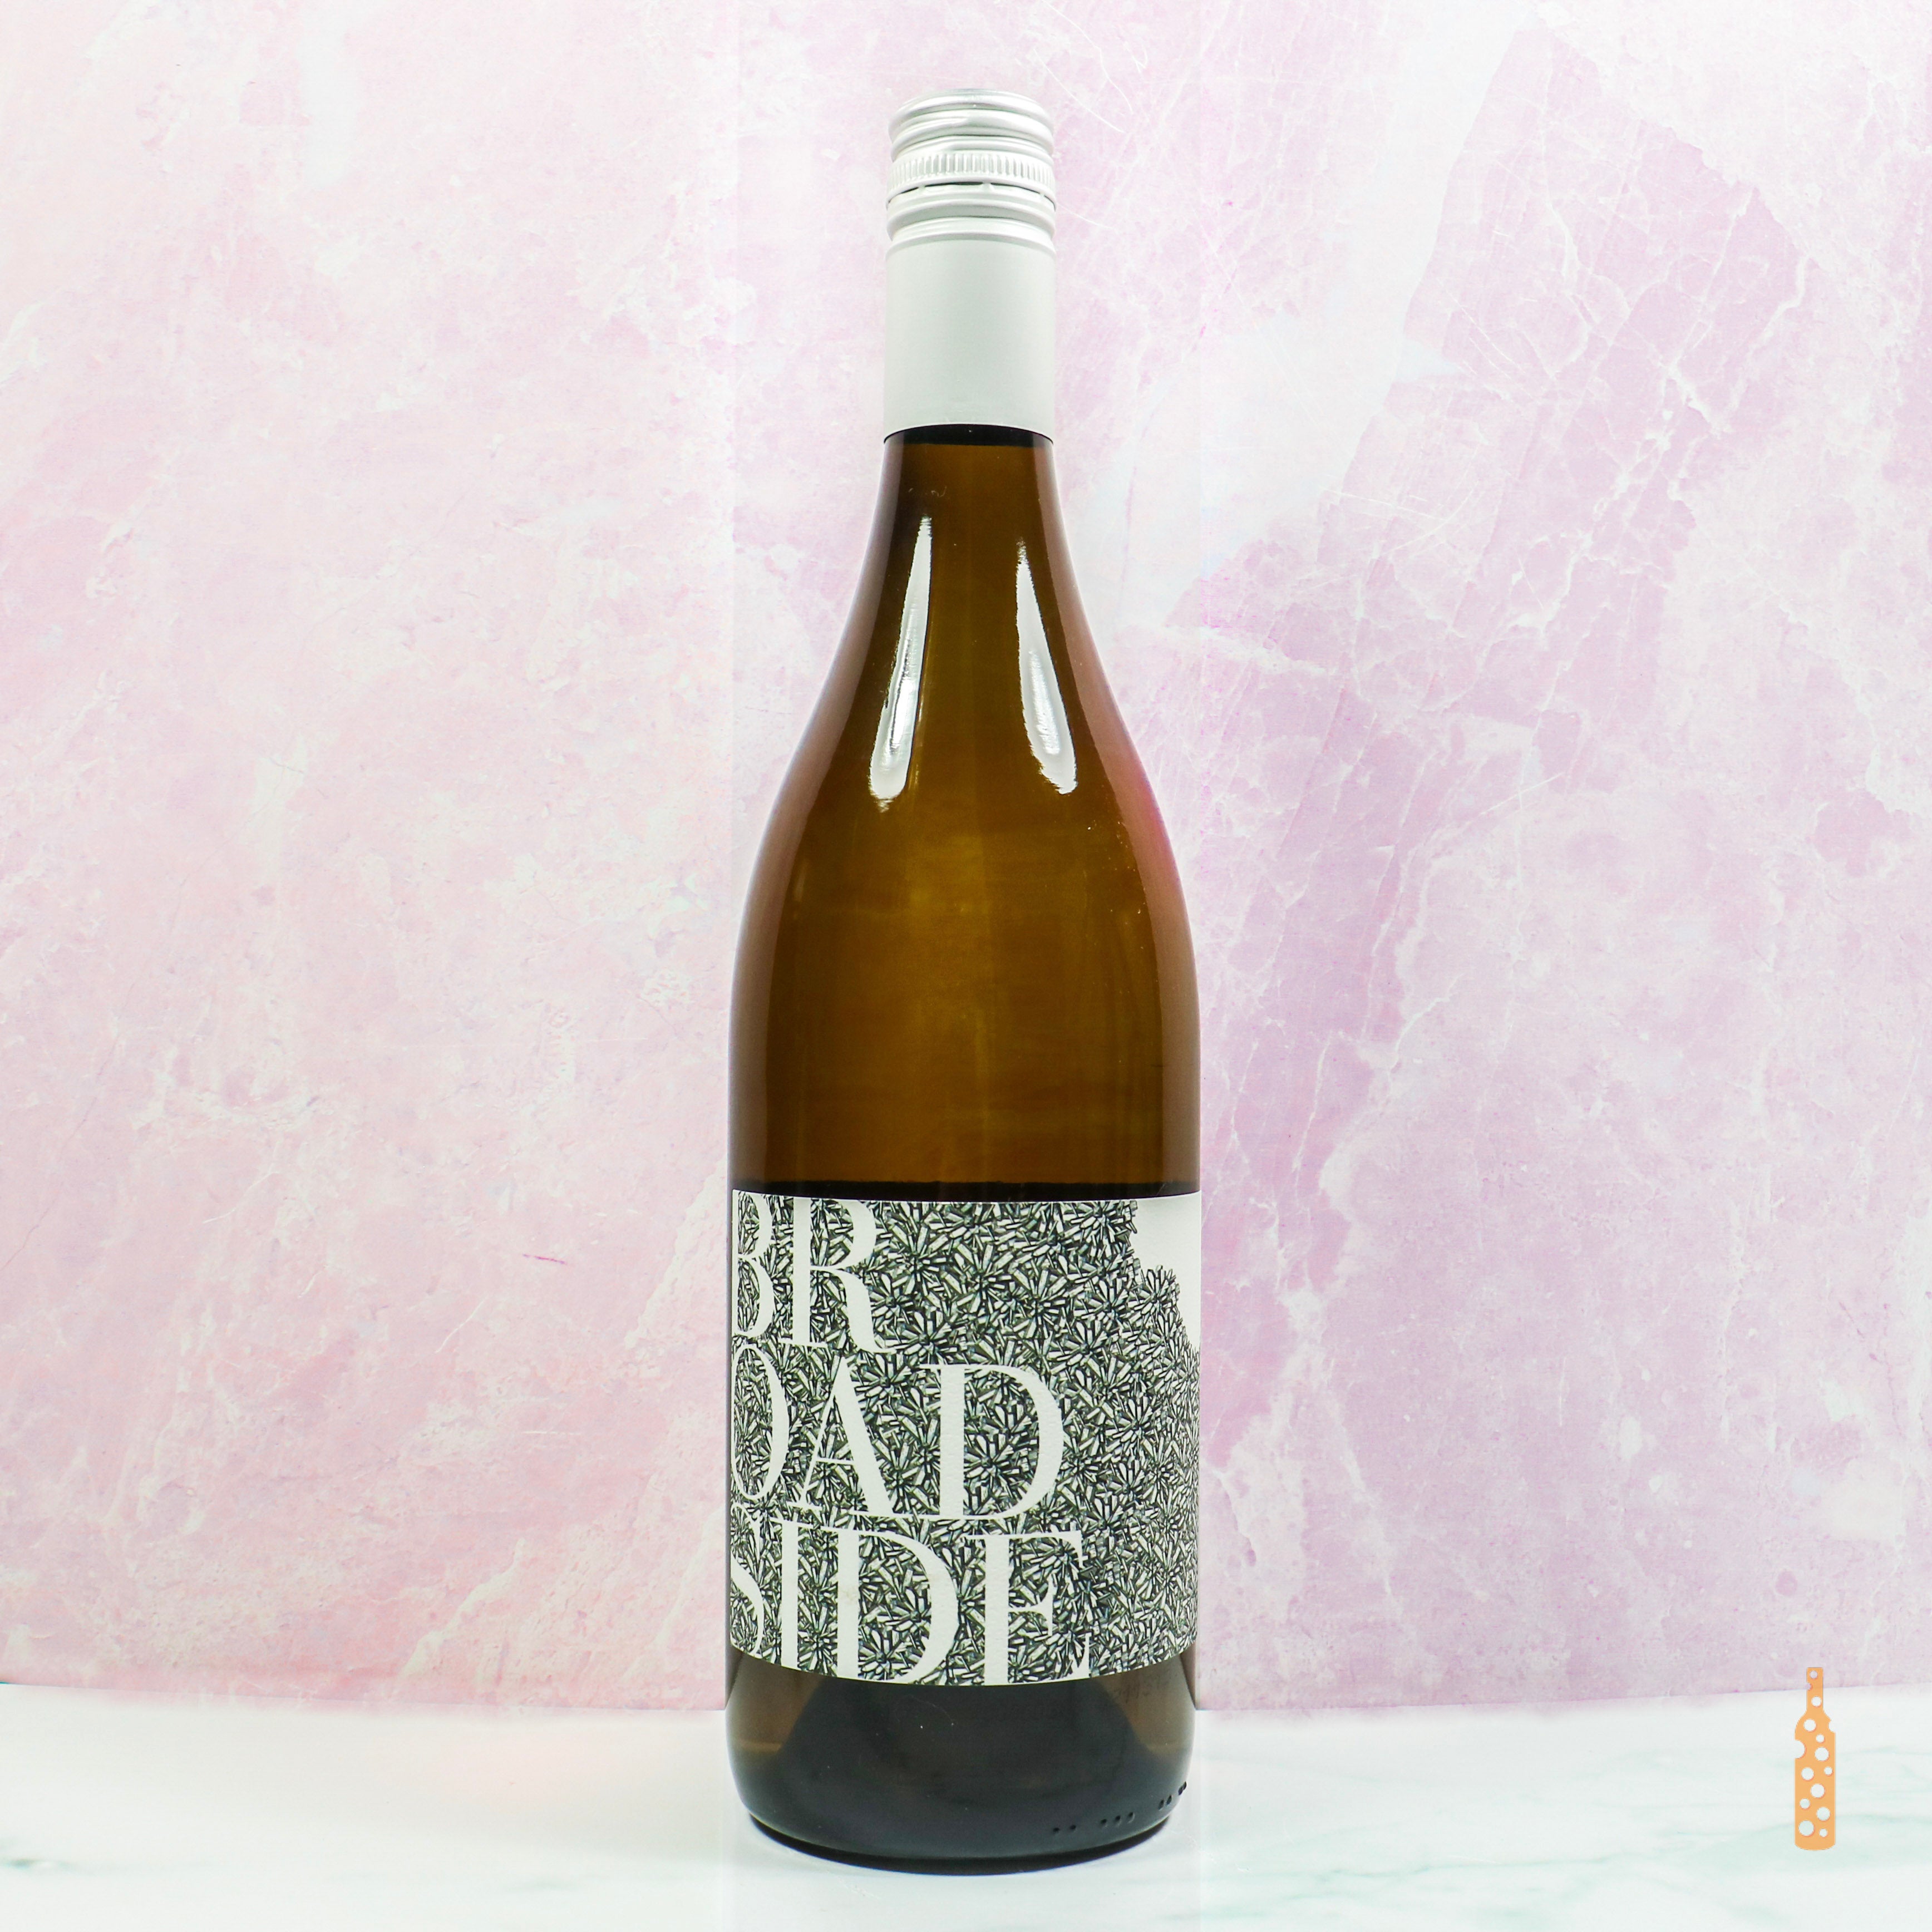 Broadside Wild Ferment Chardonnay 2020